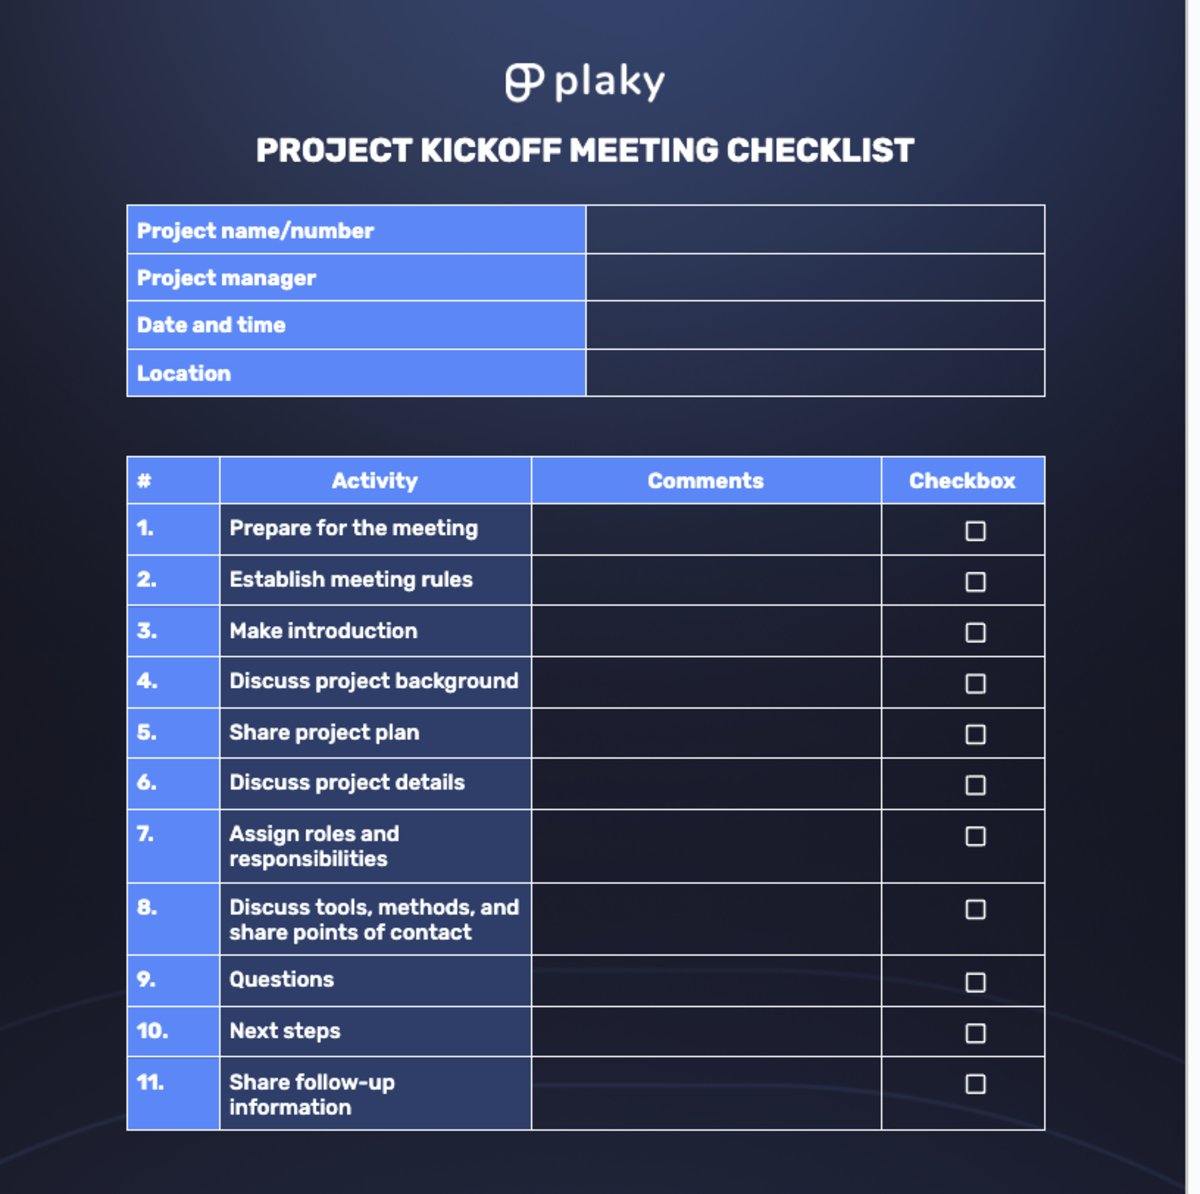 Project kickoff meeting checklist